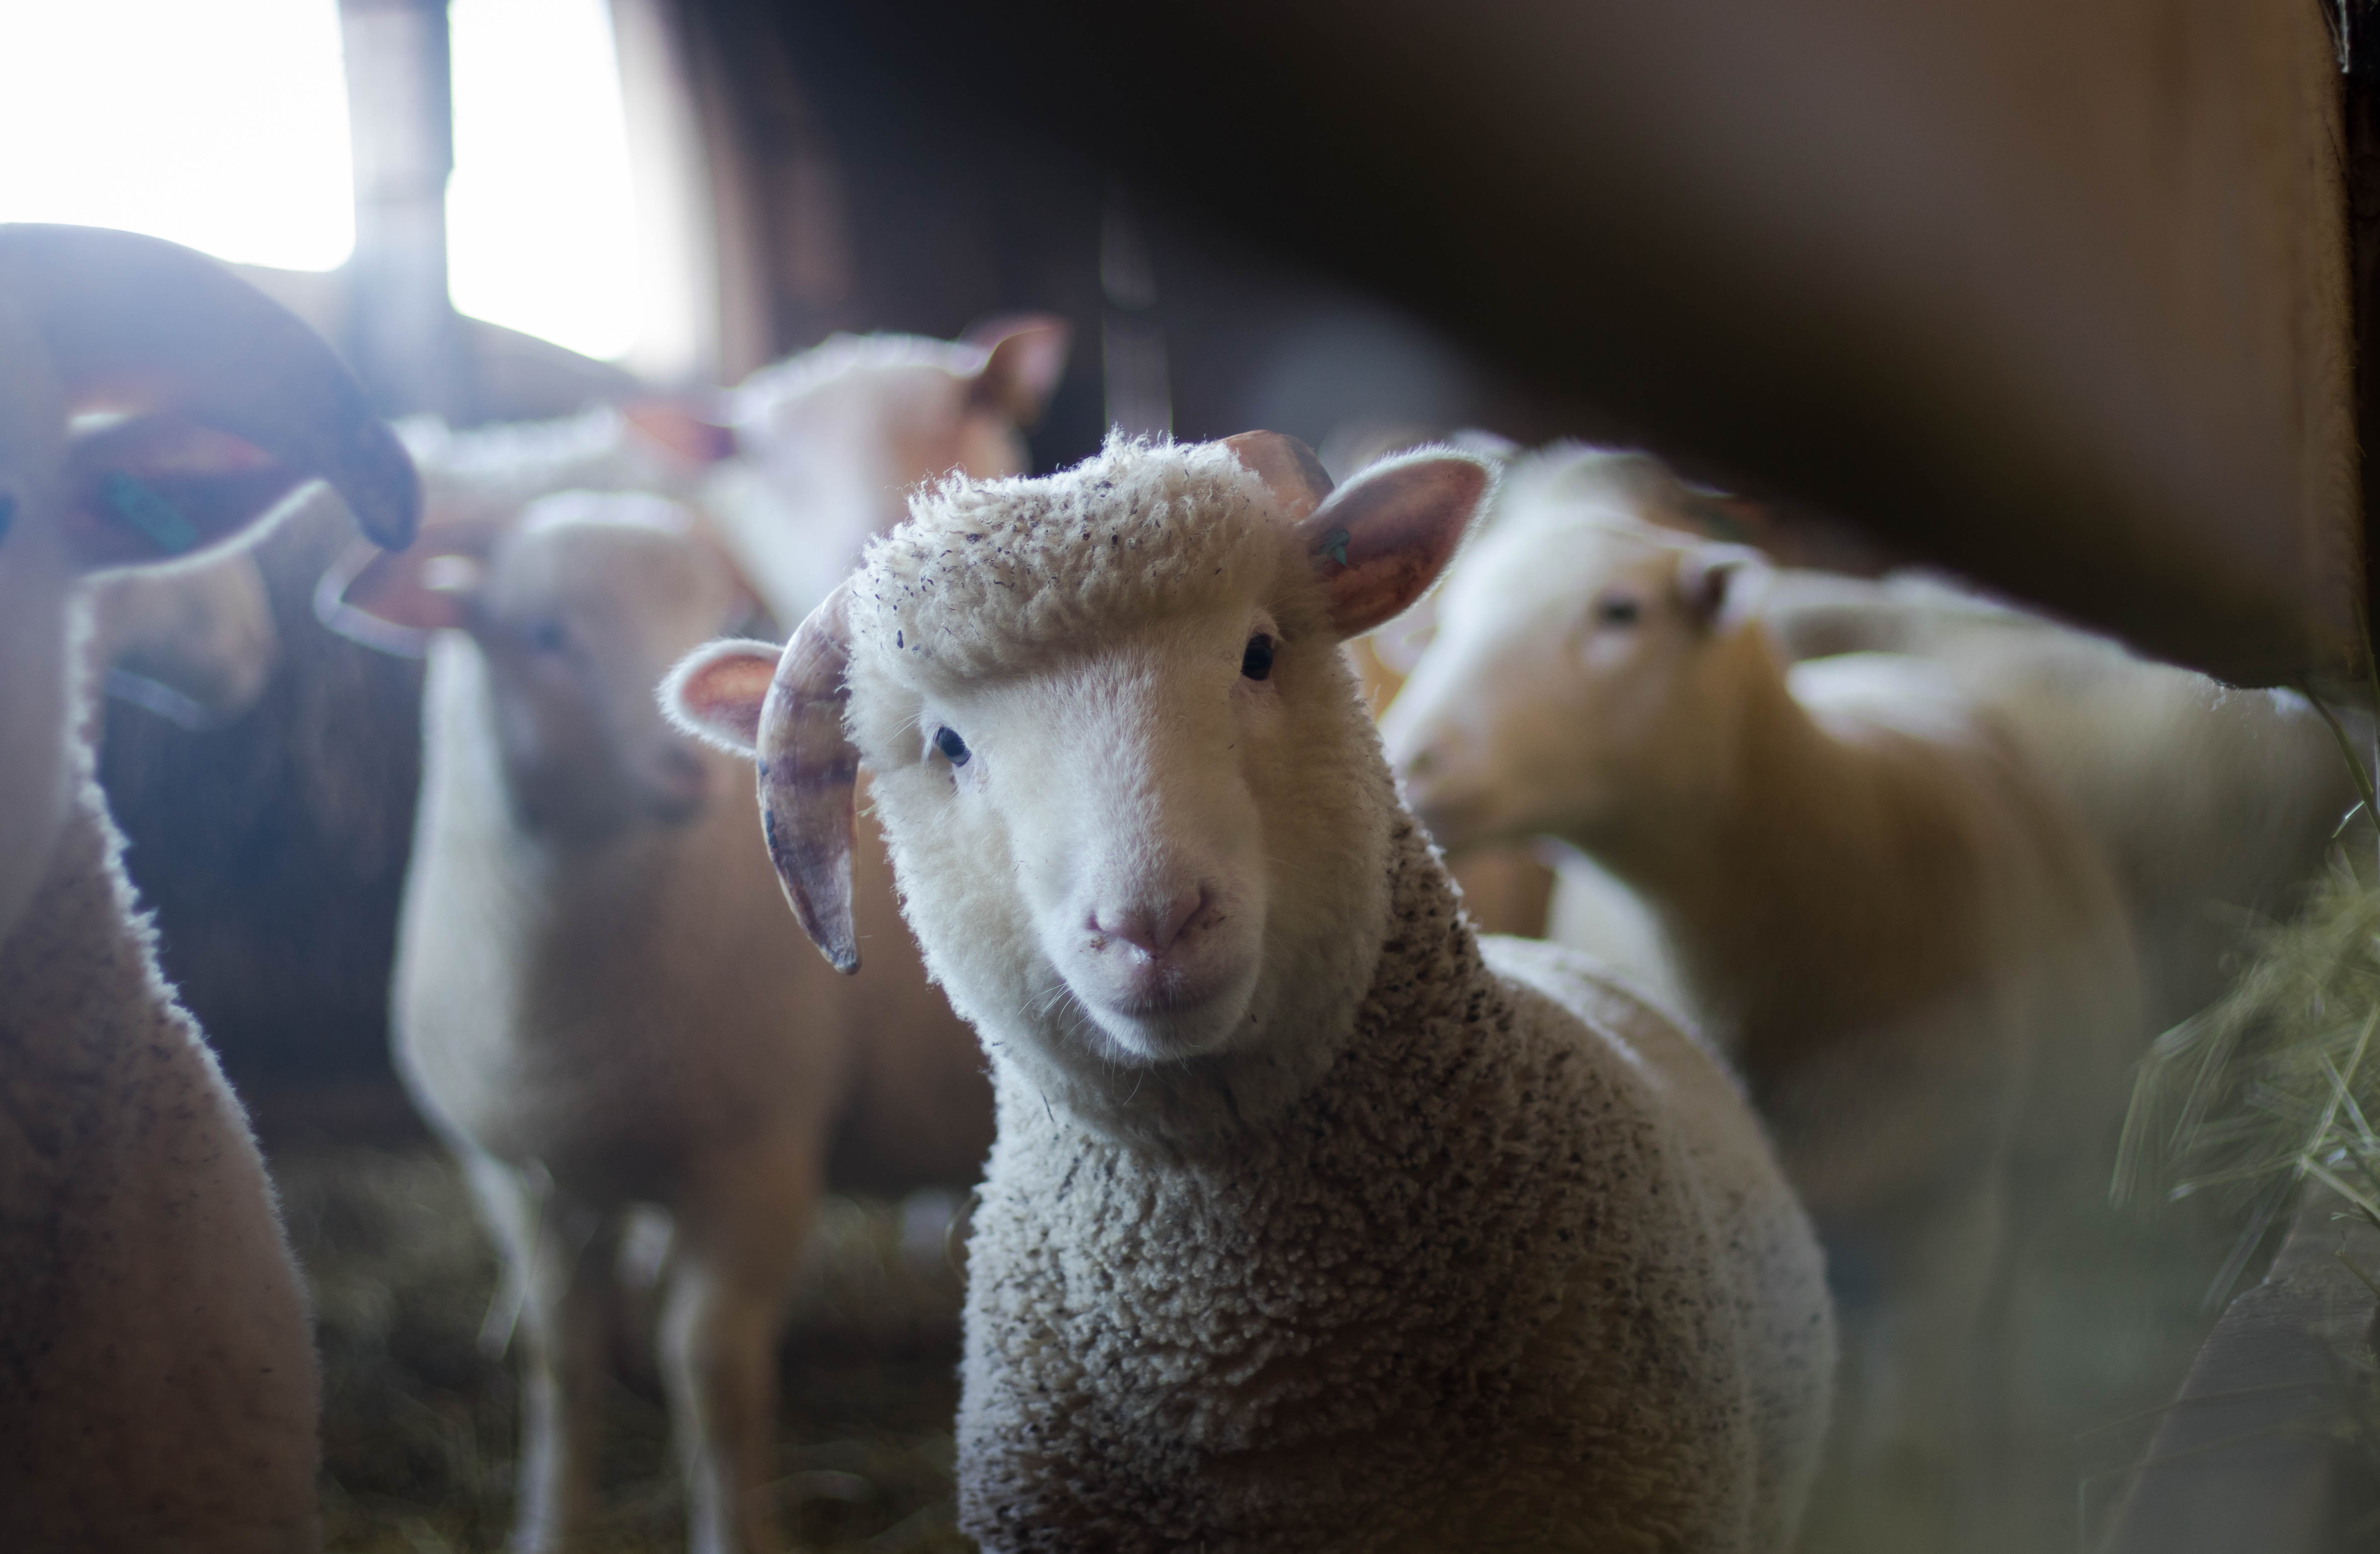 sheep in a barn stares deep into the camera lens.